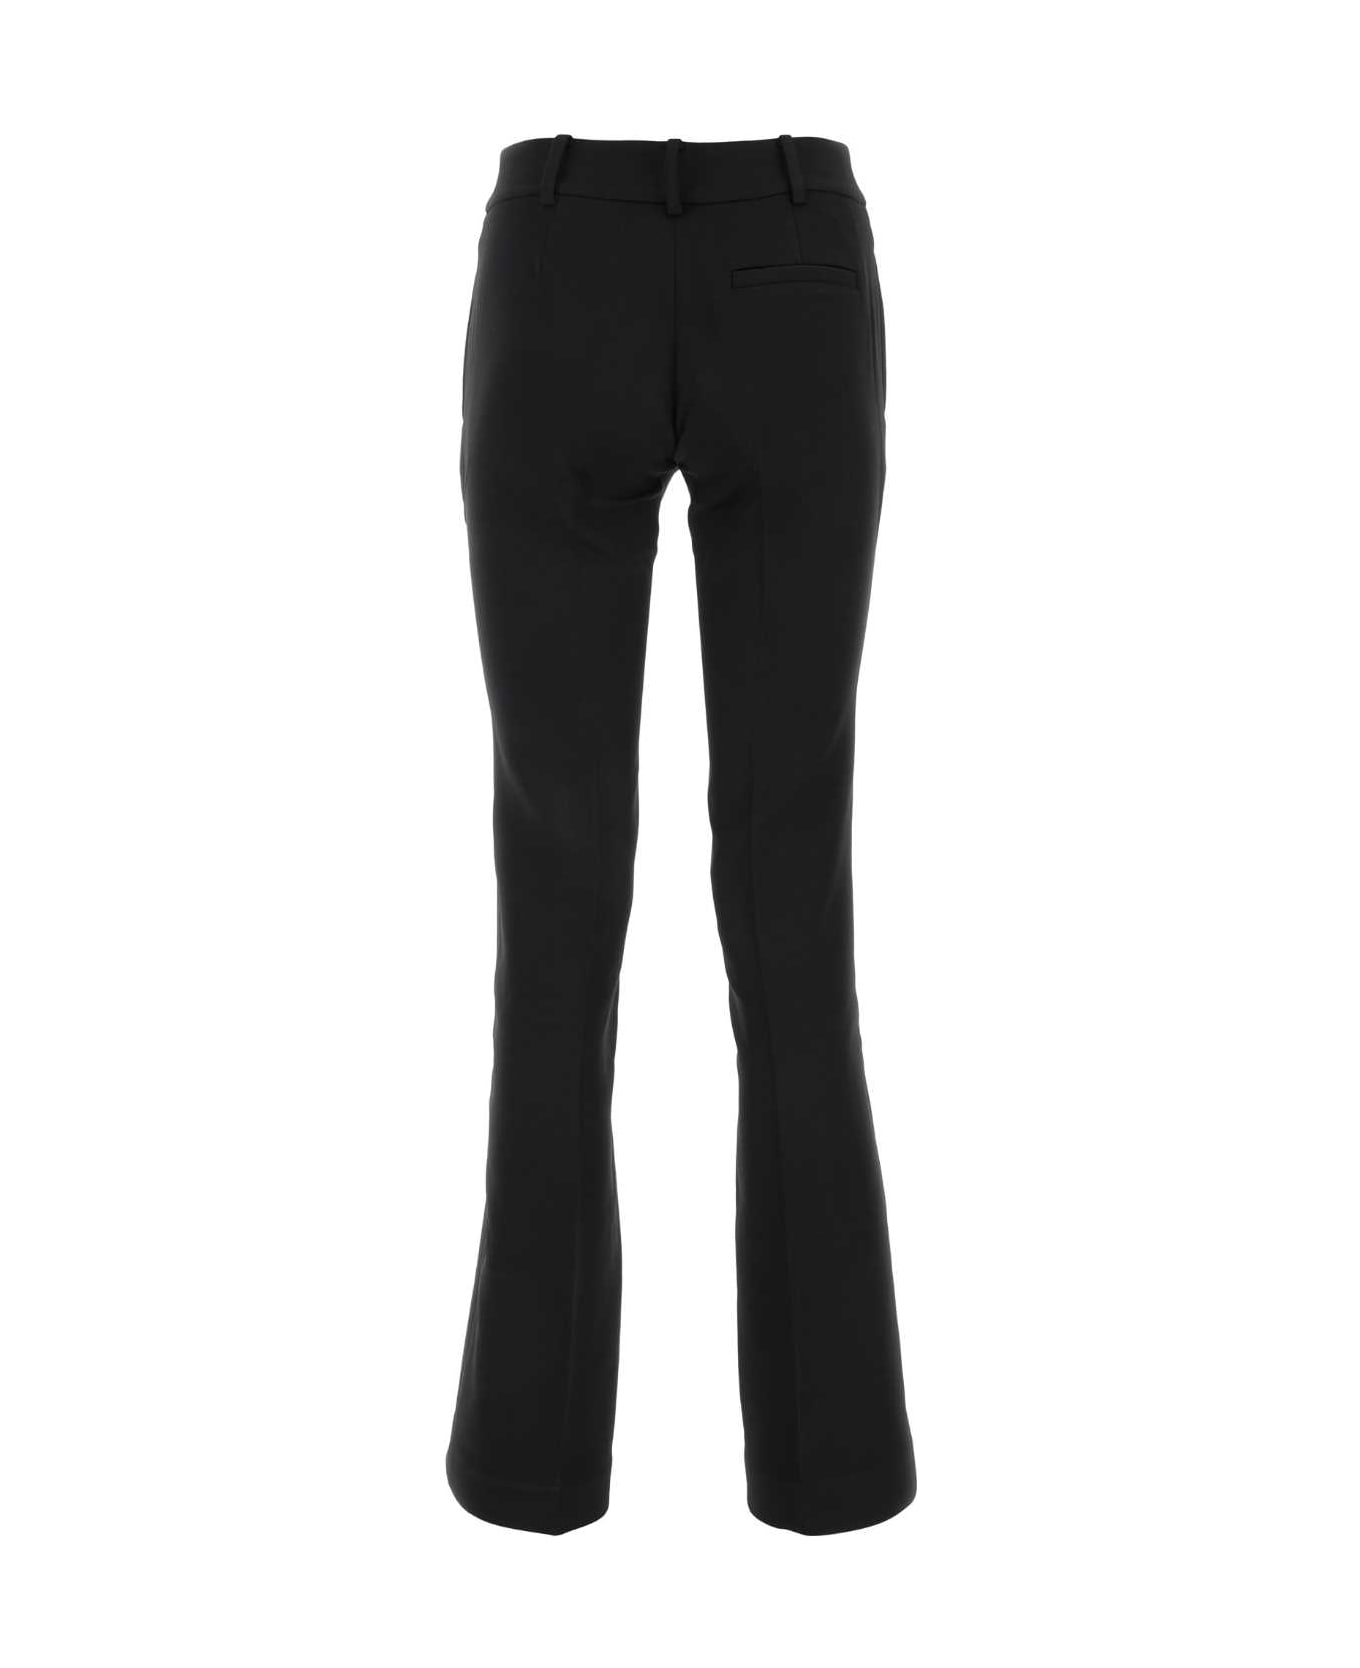 Michael Kors Black Stretch Polyester Pant - BLACK